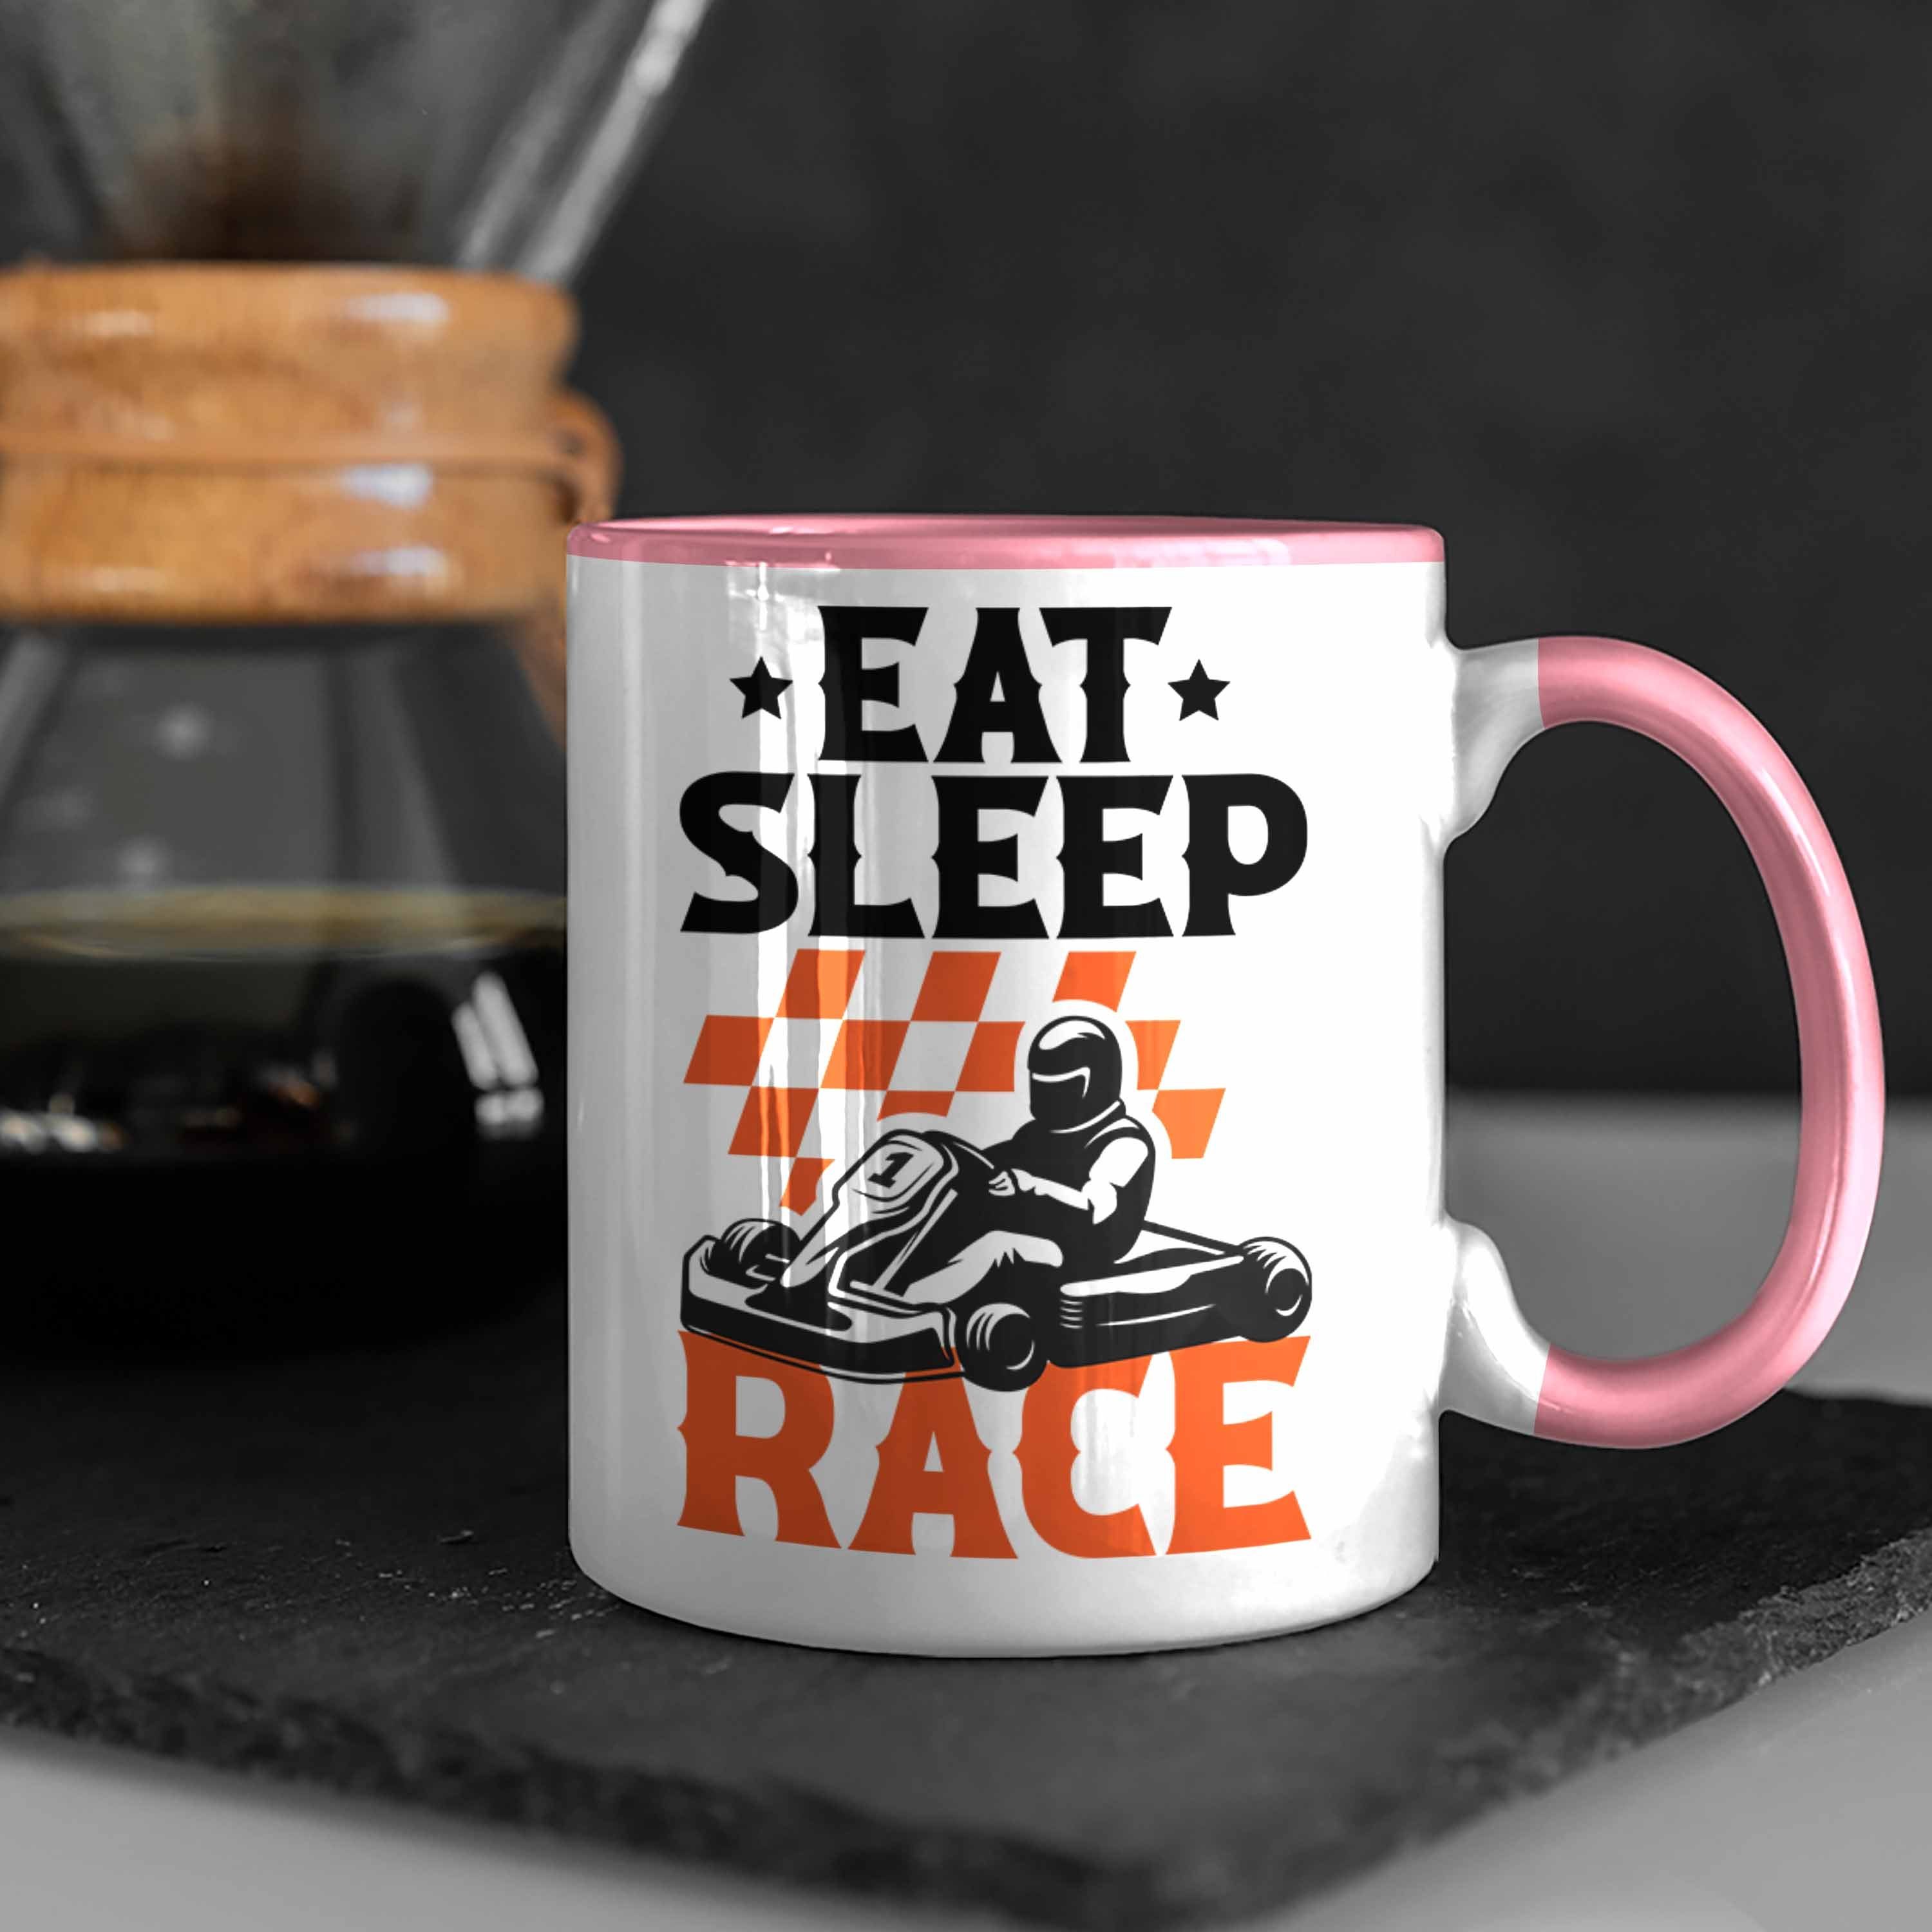 Rosa Gokart - Trendation Kart Tasse Geschenk Tasse Eat Racing Rennfahrer Race Go Trendation Fahrer Sleep